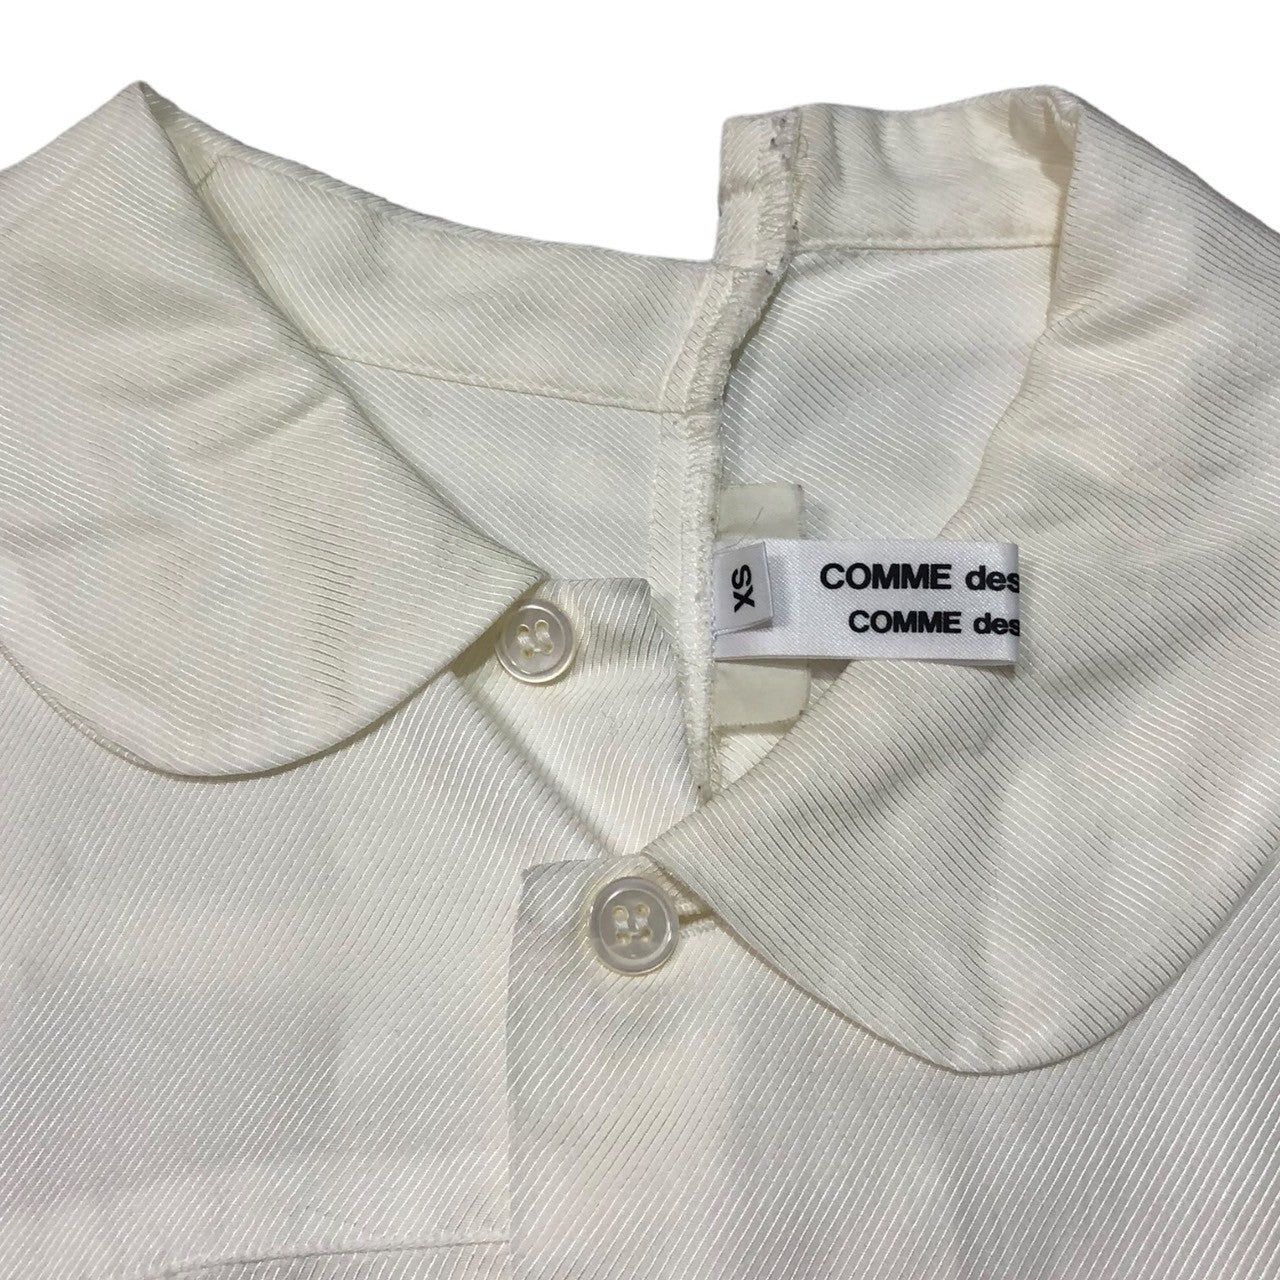 COMME des GARCONS COMME des GARCONS(コムデギャルソンコムデギャルソン) 12AW round collar blouse/ラウンドカラーブラウス RJ-B008 SIZE XS オフホワイト AD2012